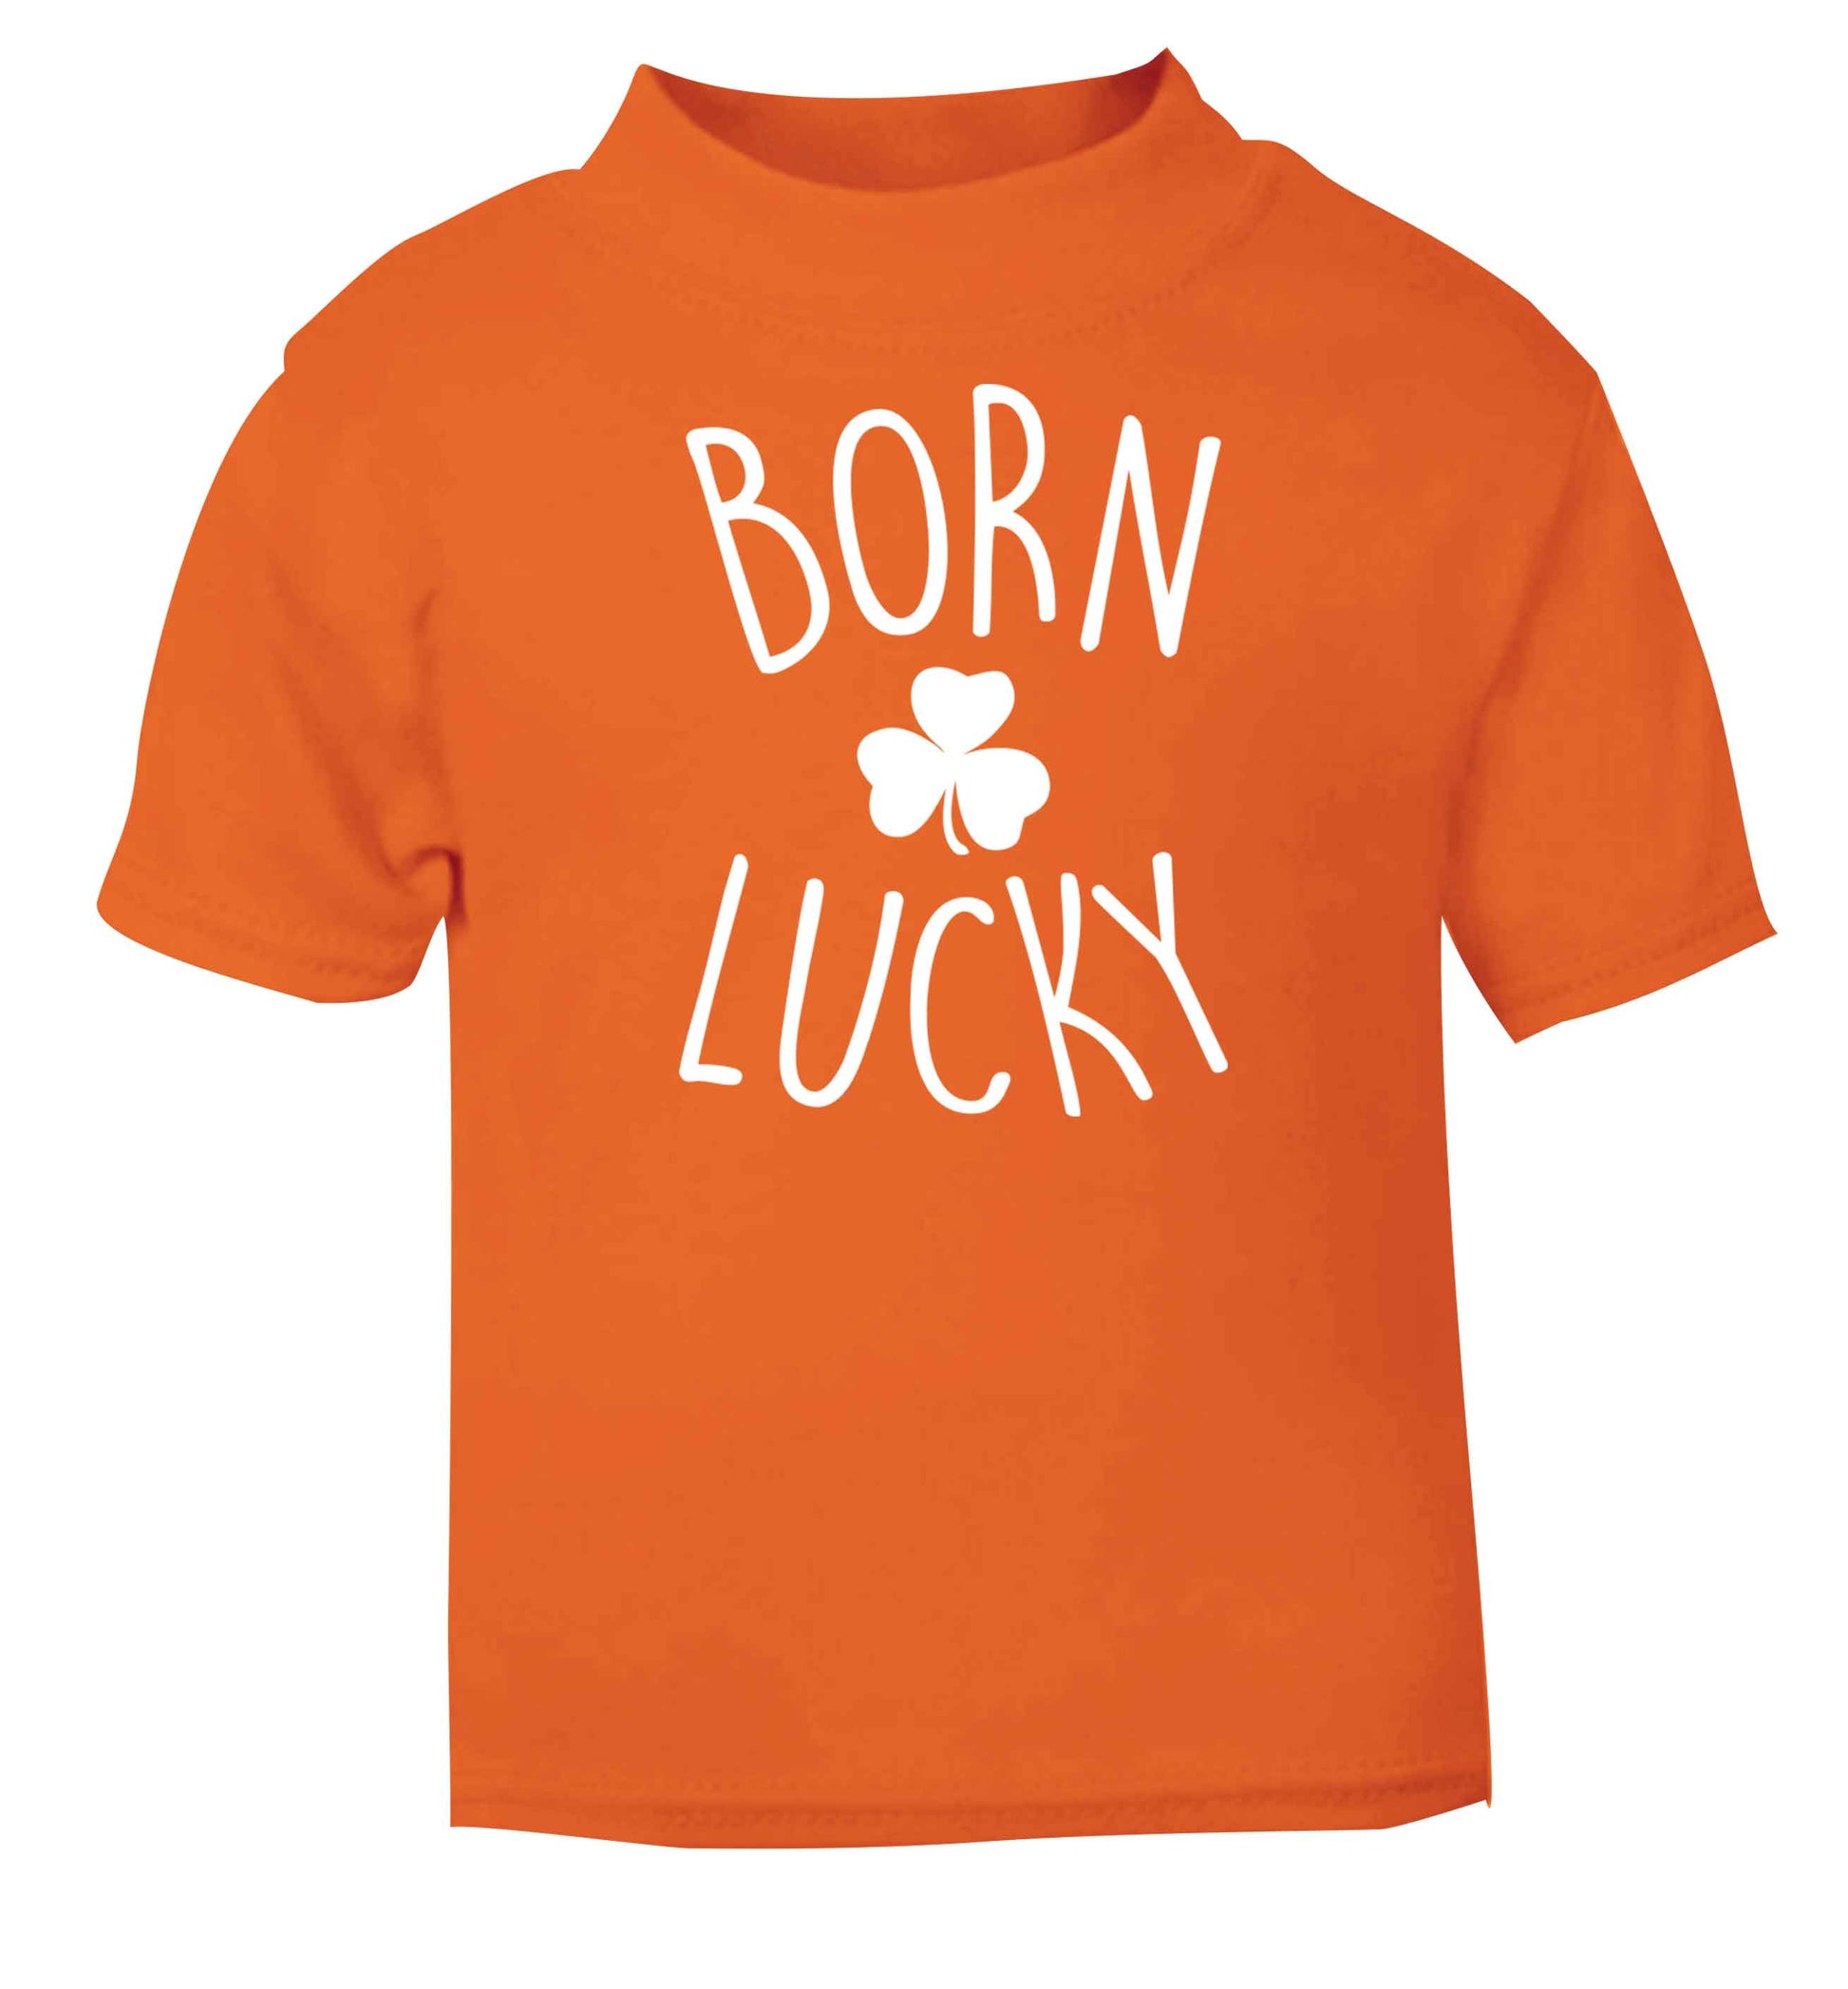 Born Lucky orange baby toddler Tshirt 2 Years